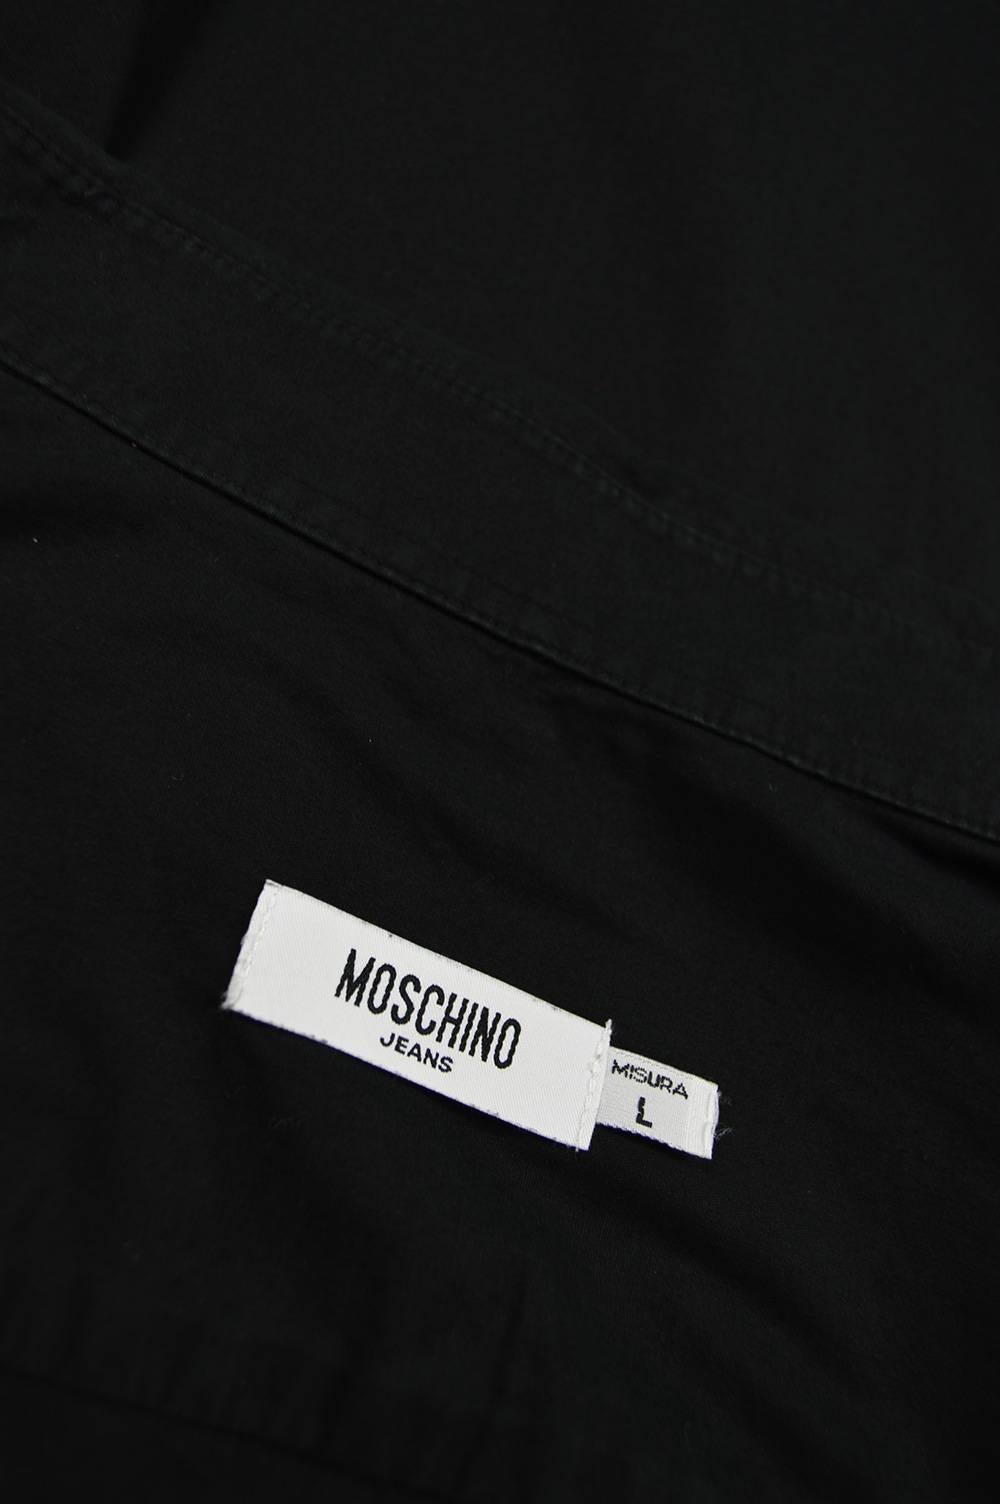 Moschino Men's Black Cotton Playing Card Short Sleeve Shirt, 1990s 5